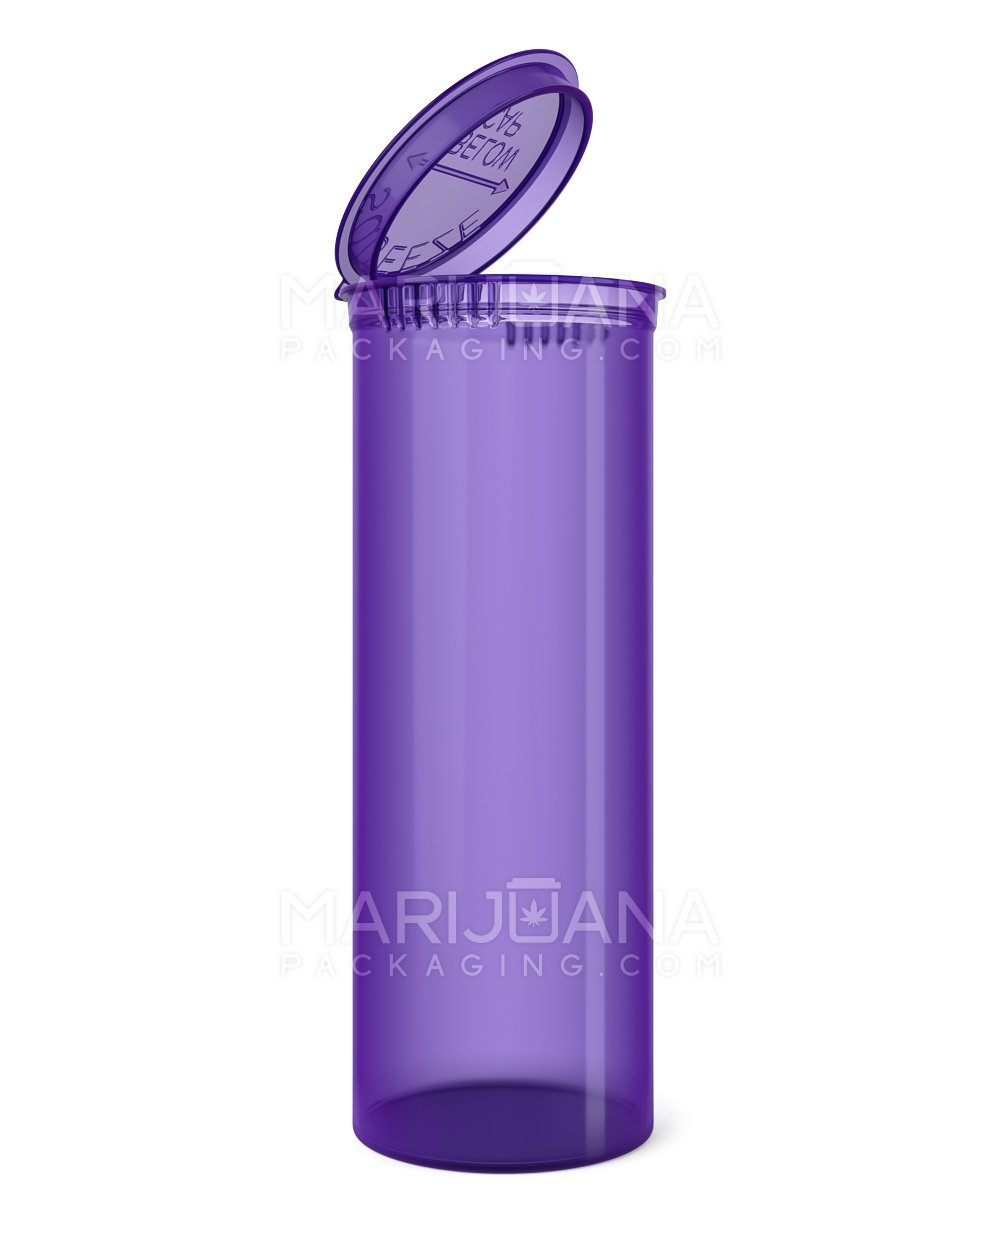 Child Resistant Transparent Purple Pop Top Bottles | 60dr - 14g | Sample - 1